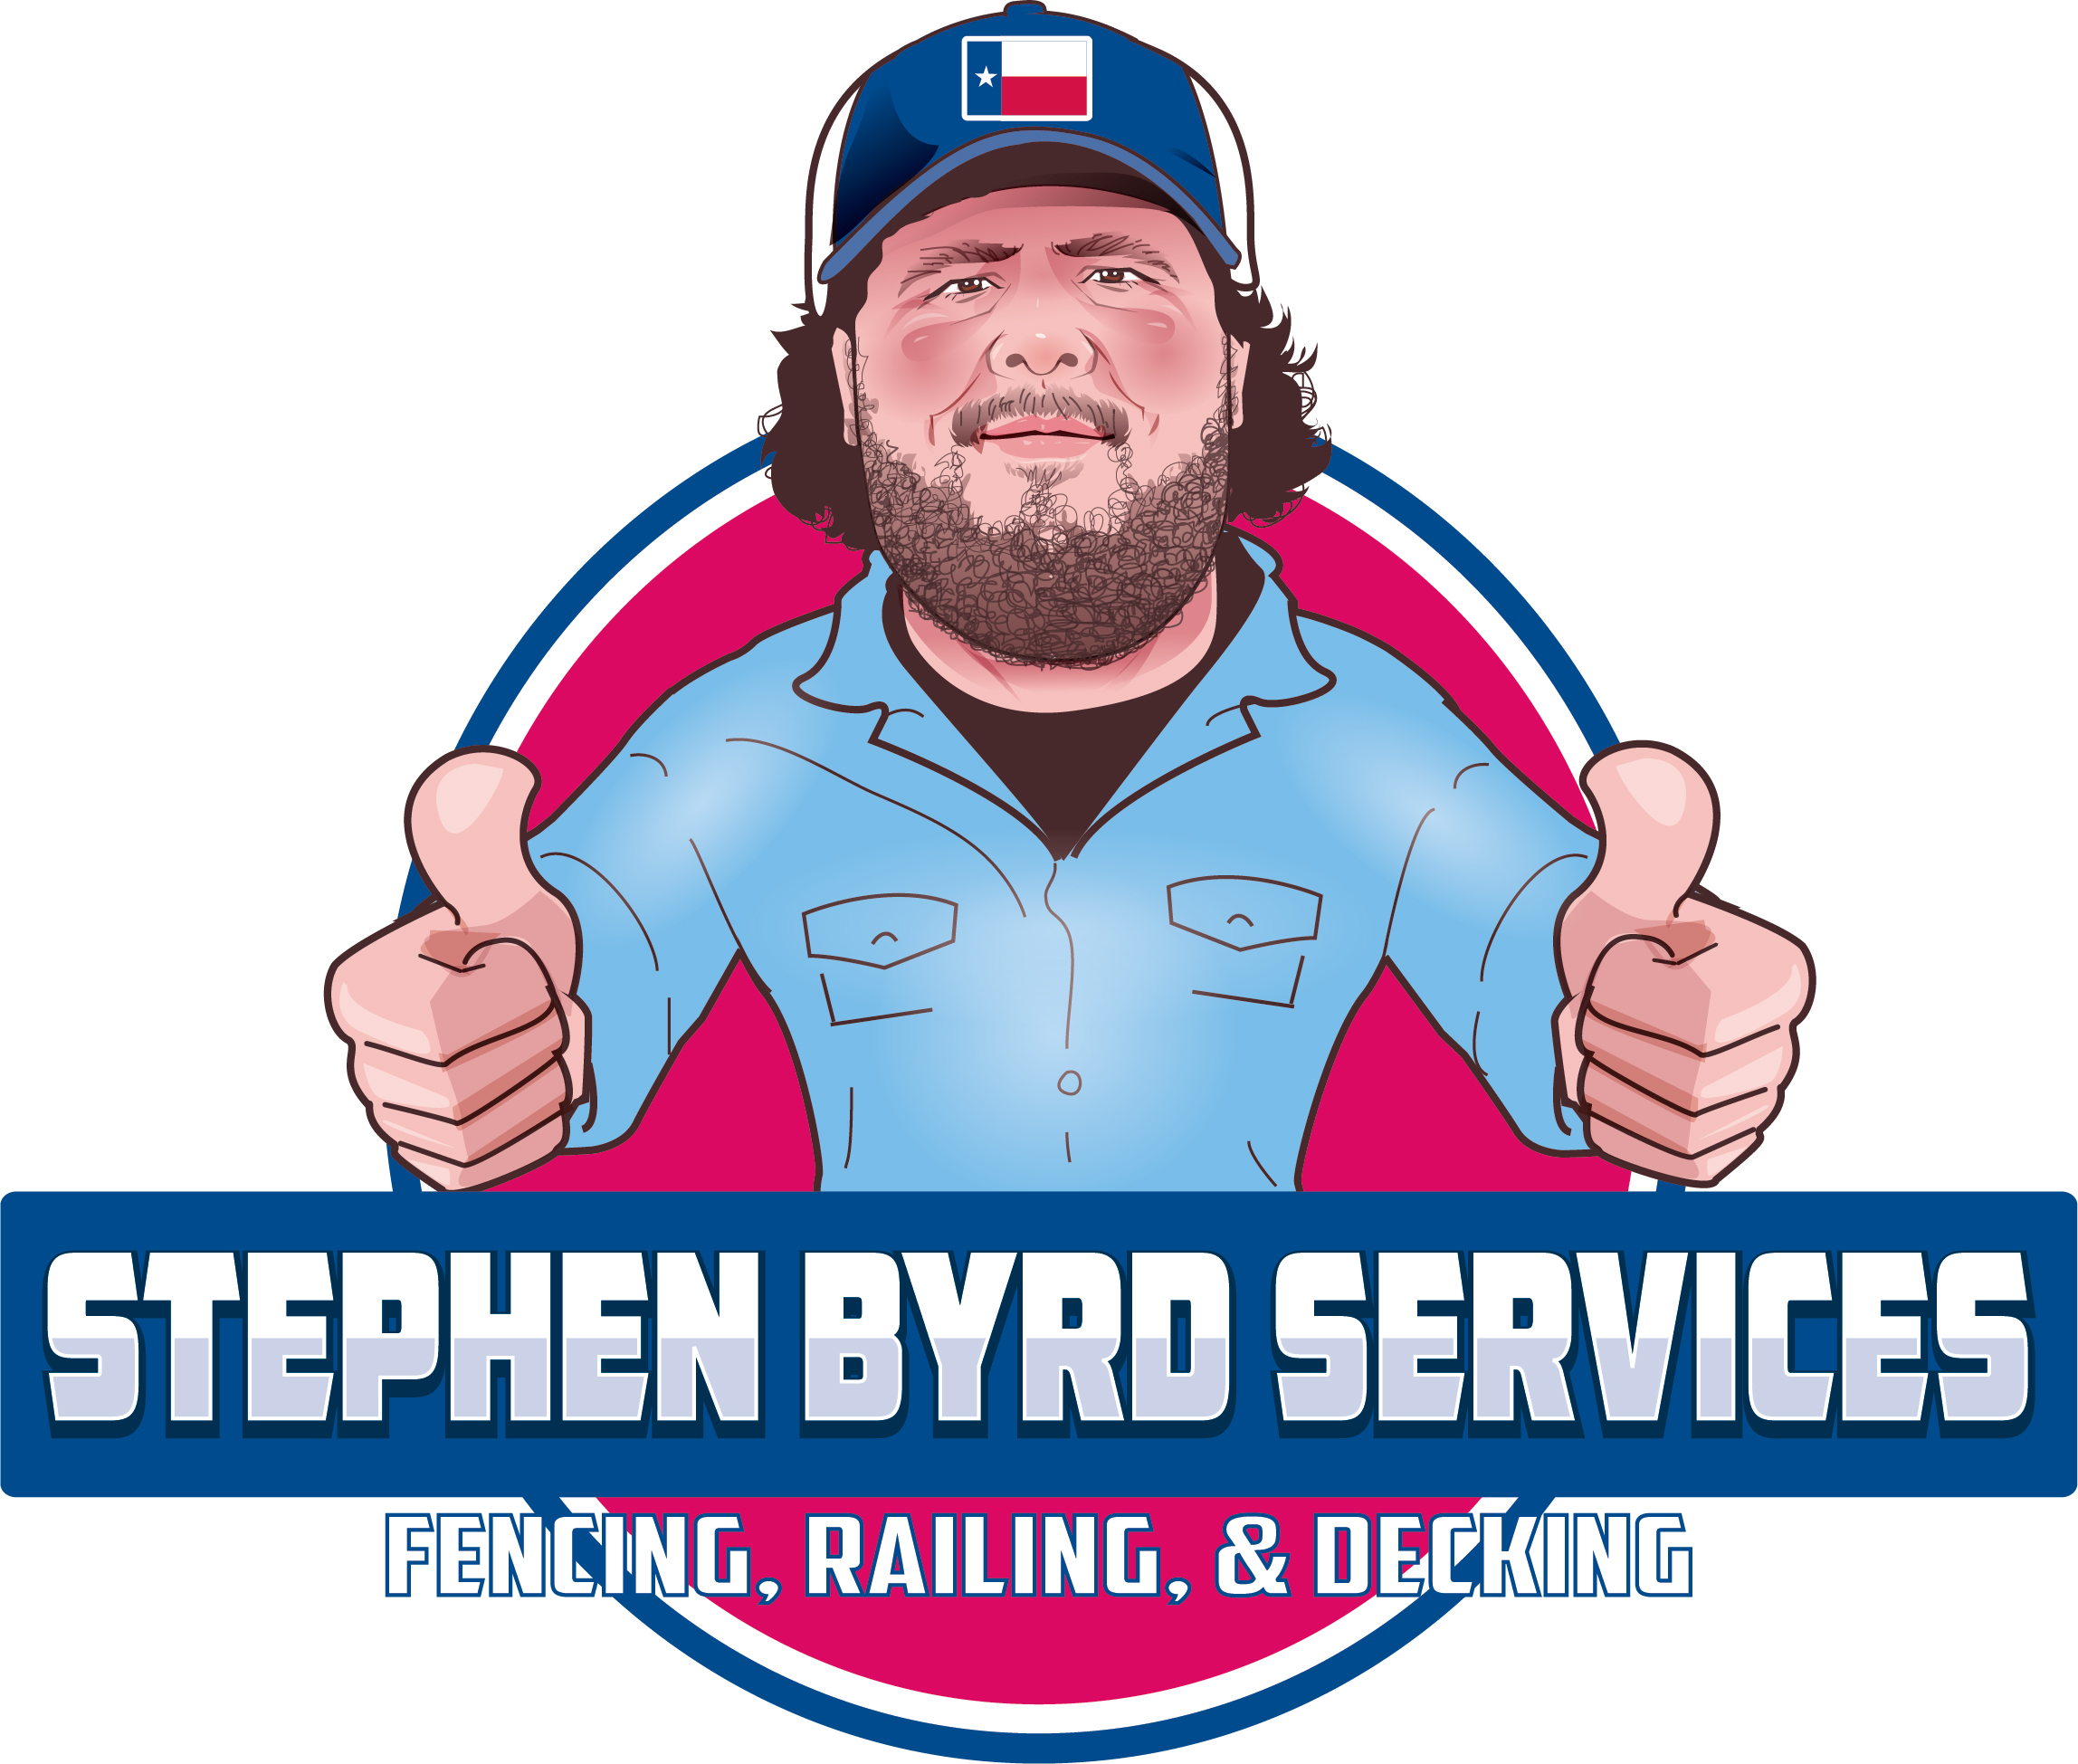 Stephen Byrd Services